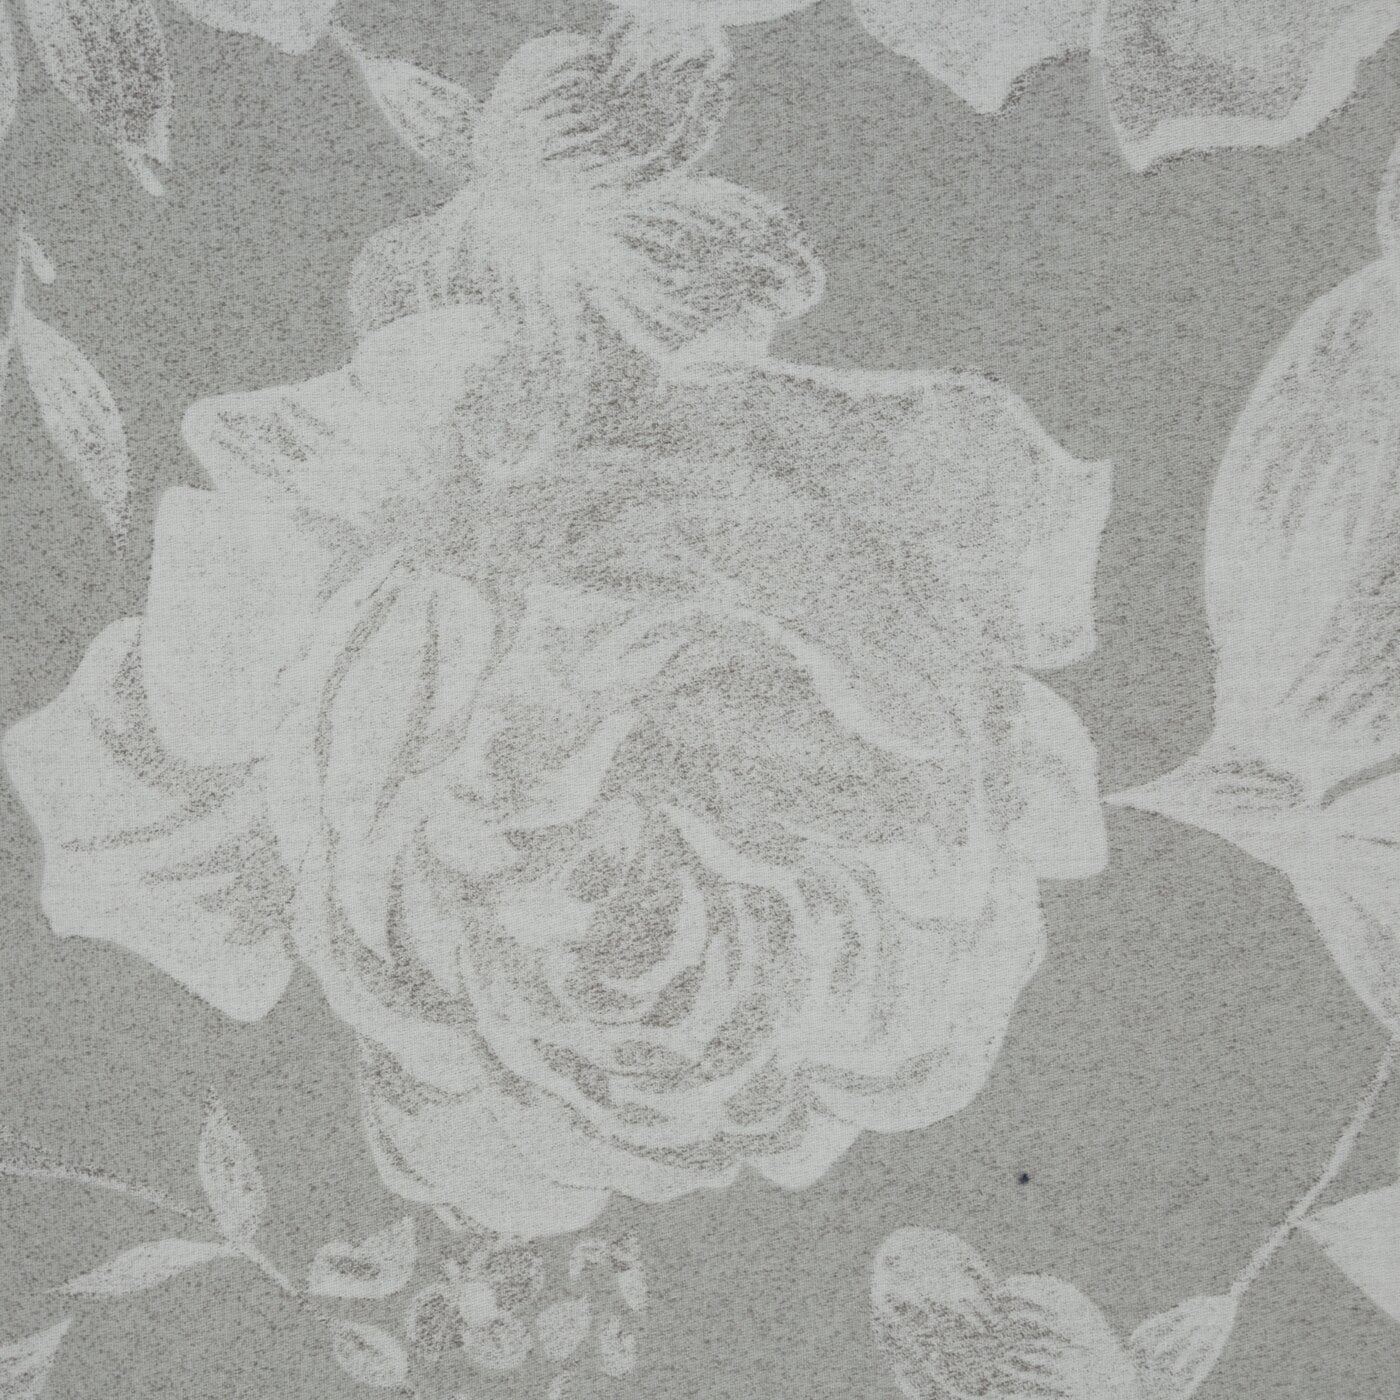 Lenjerie de pat din bumbac macosatin cu imprimeu floral gri deschis TERRA COLLECTION SEVILLE 1 Perdele de Poveste